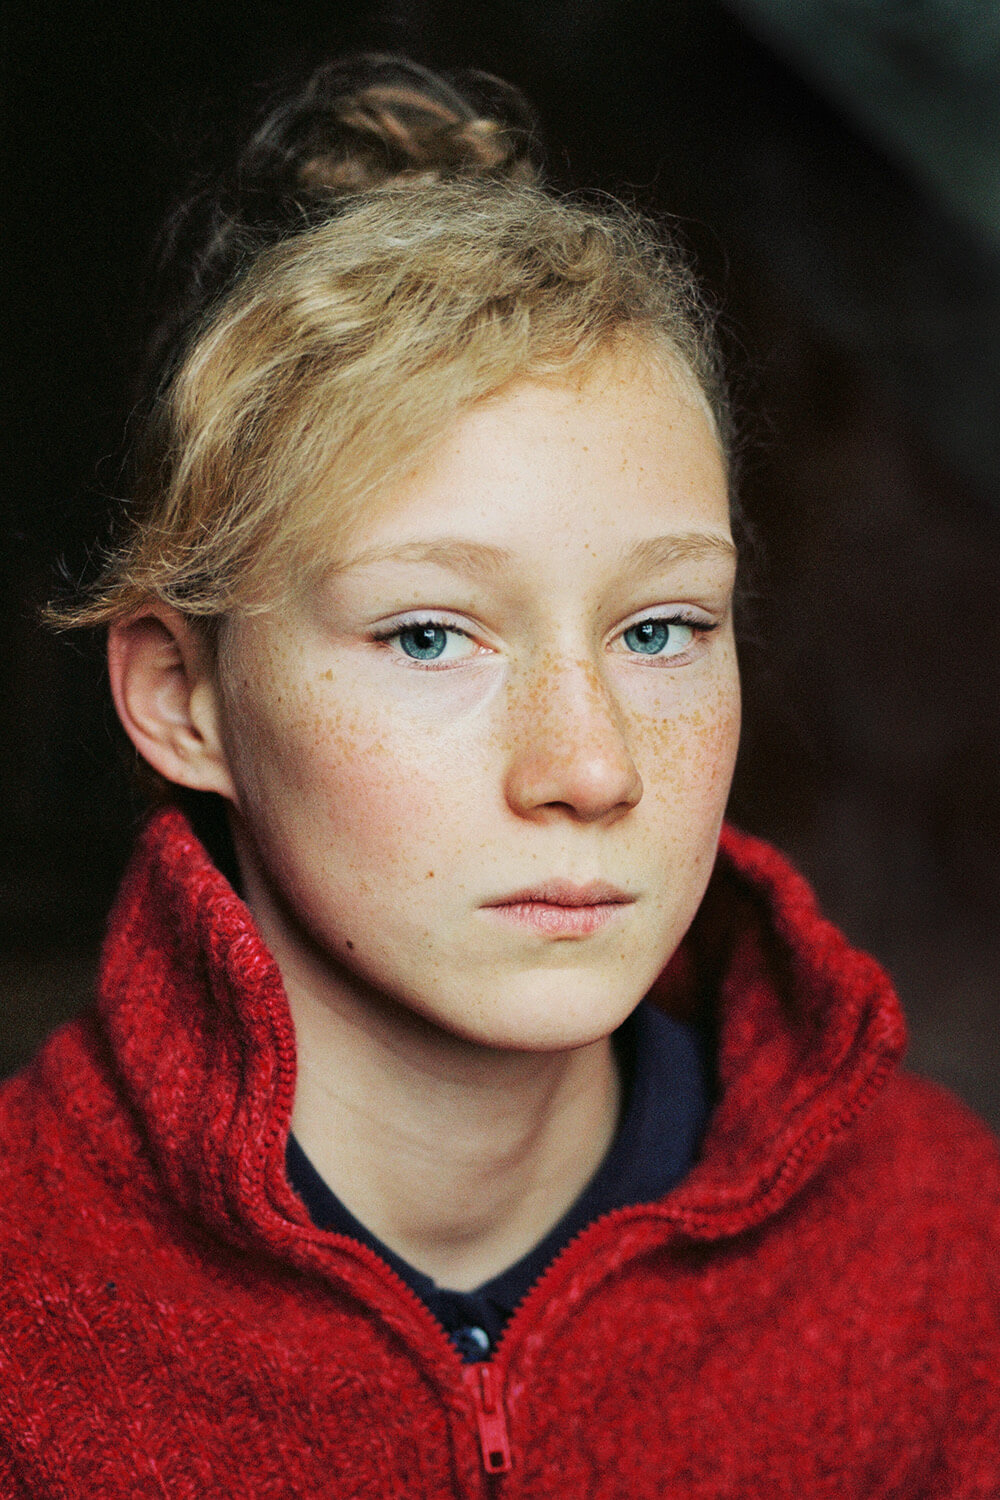 Göran Gnaudschun, Thikwa, 2008, from: New Portraits, 2005-2008, pigment print, 24.8 x 16.3 cm